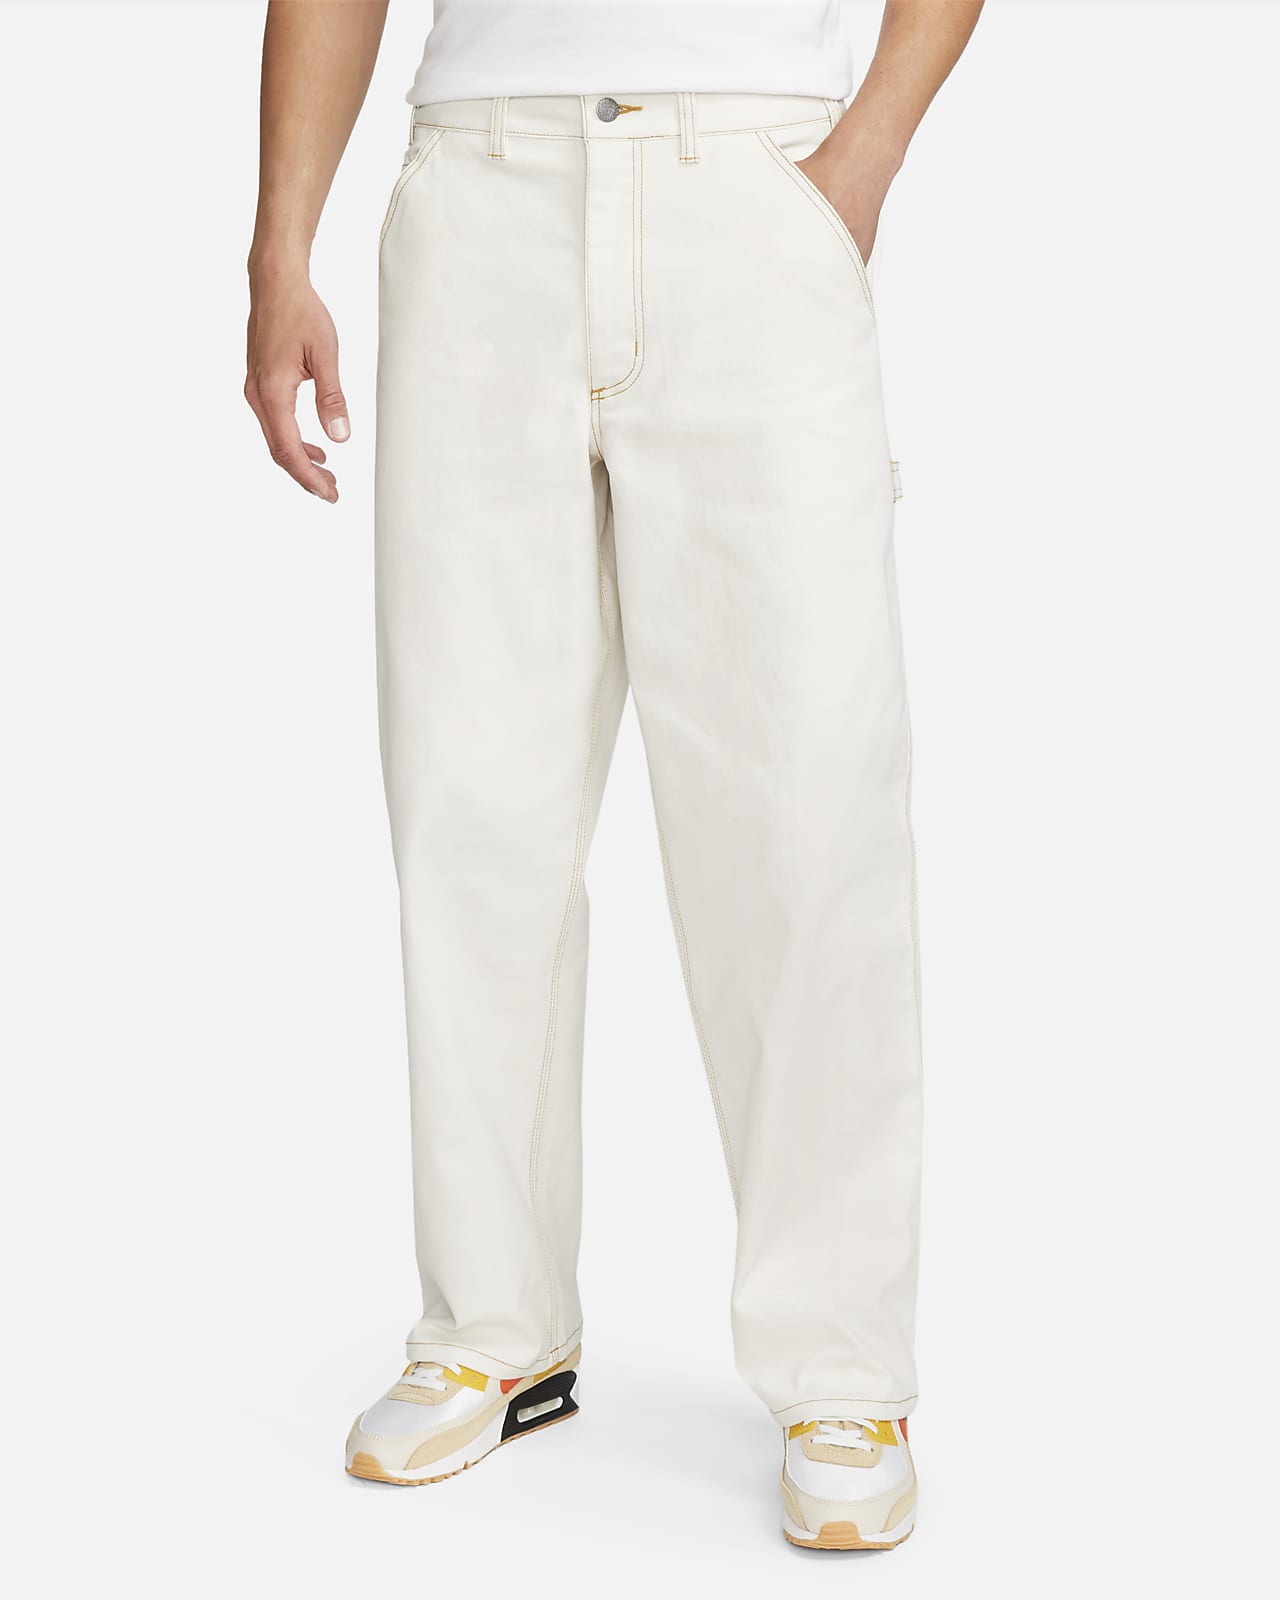 Buy Polar Fleece Lined Carpenter Pant Men's Jeans & Pants from